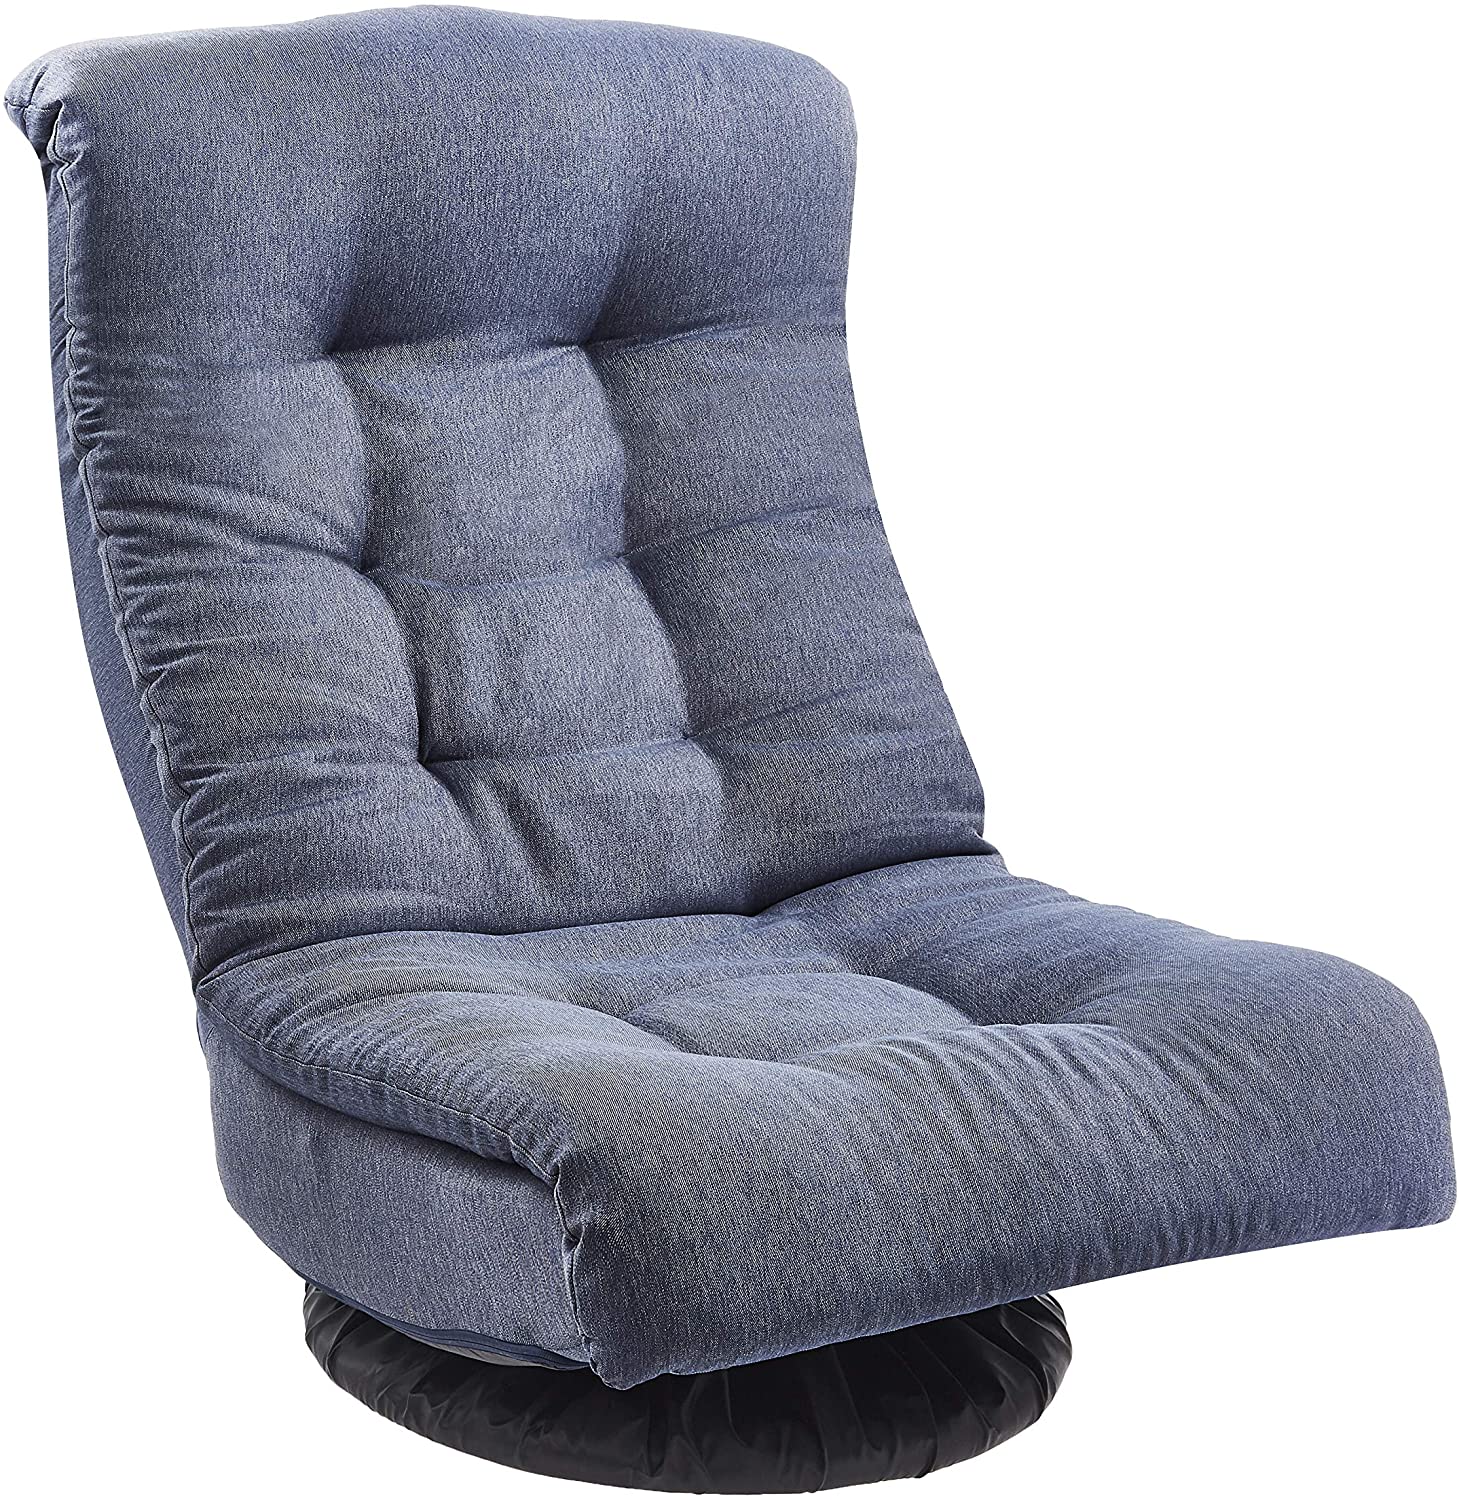 Chair with headrest